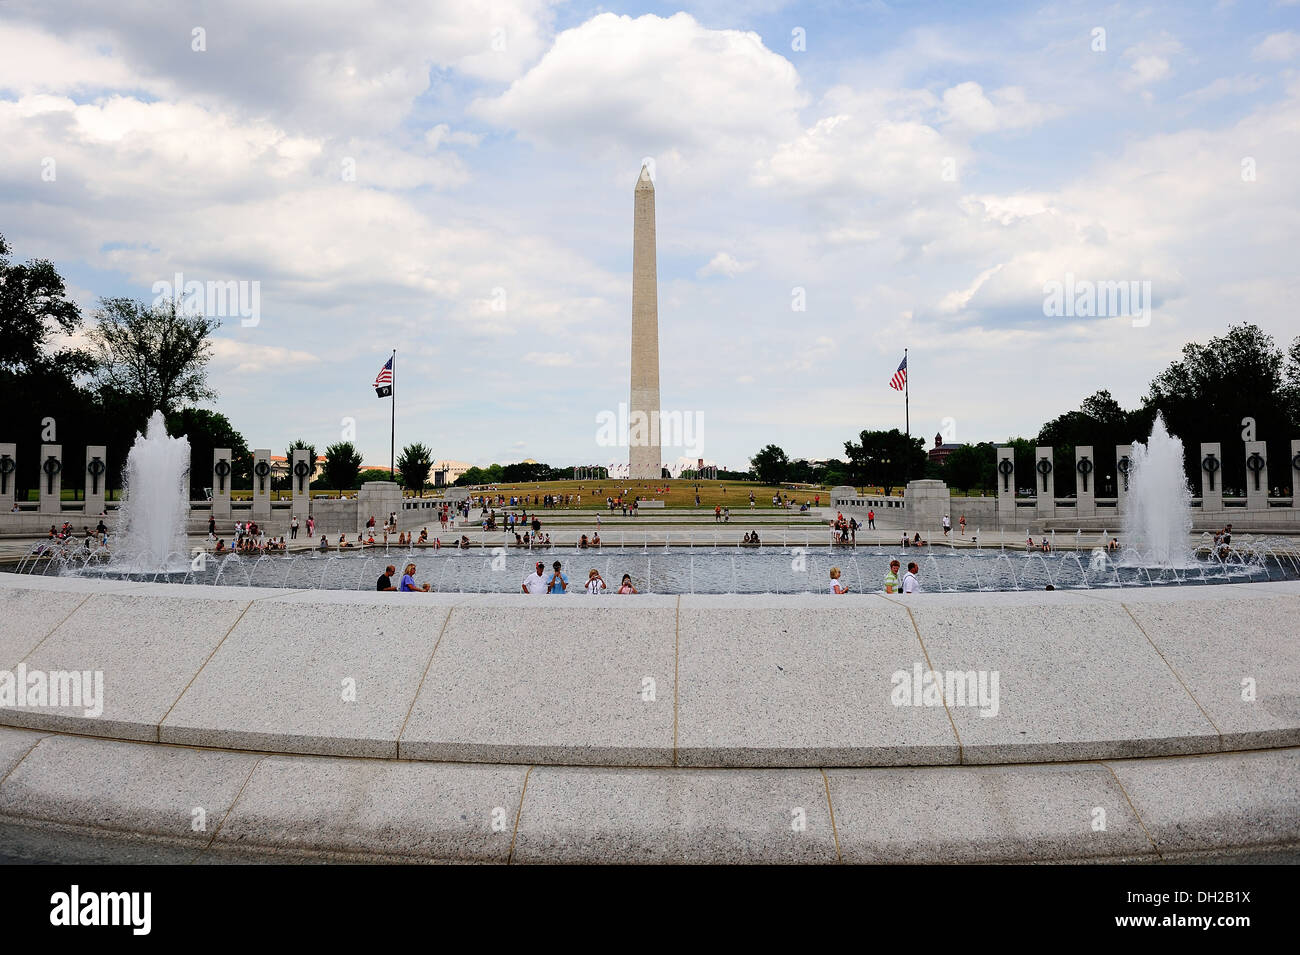 The Washington Monument and World War 2 Memorial in Washington D.C. Stock Photo